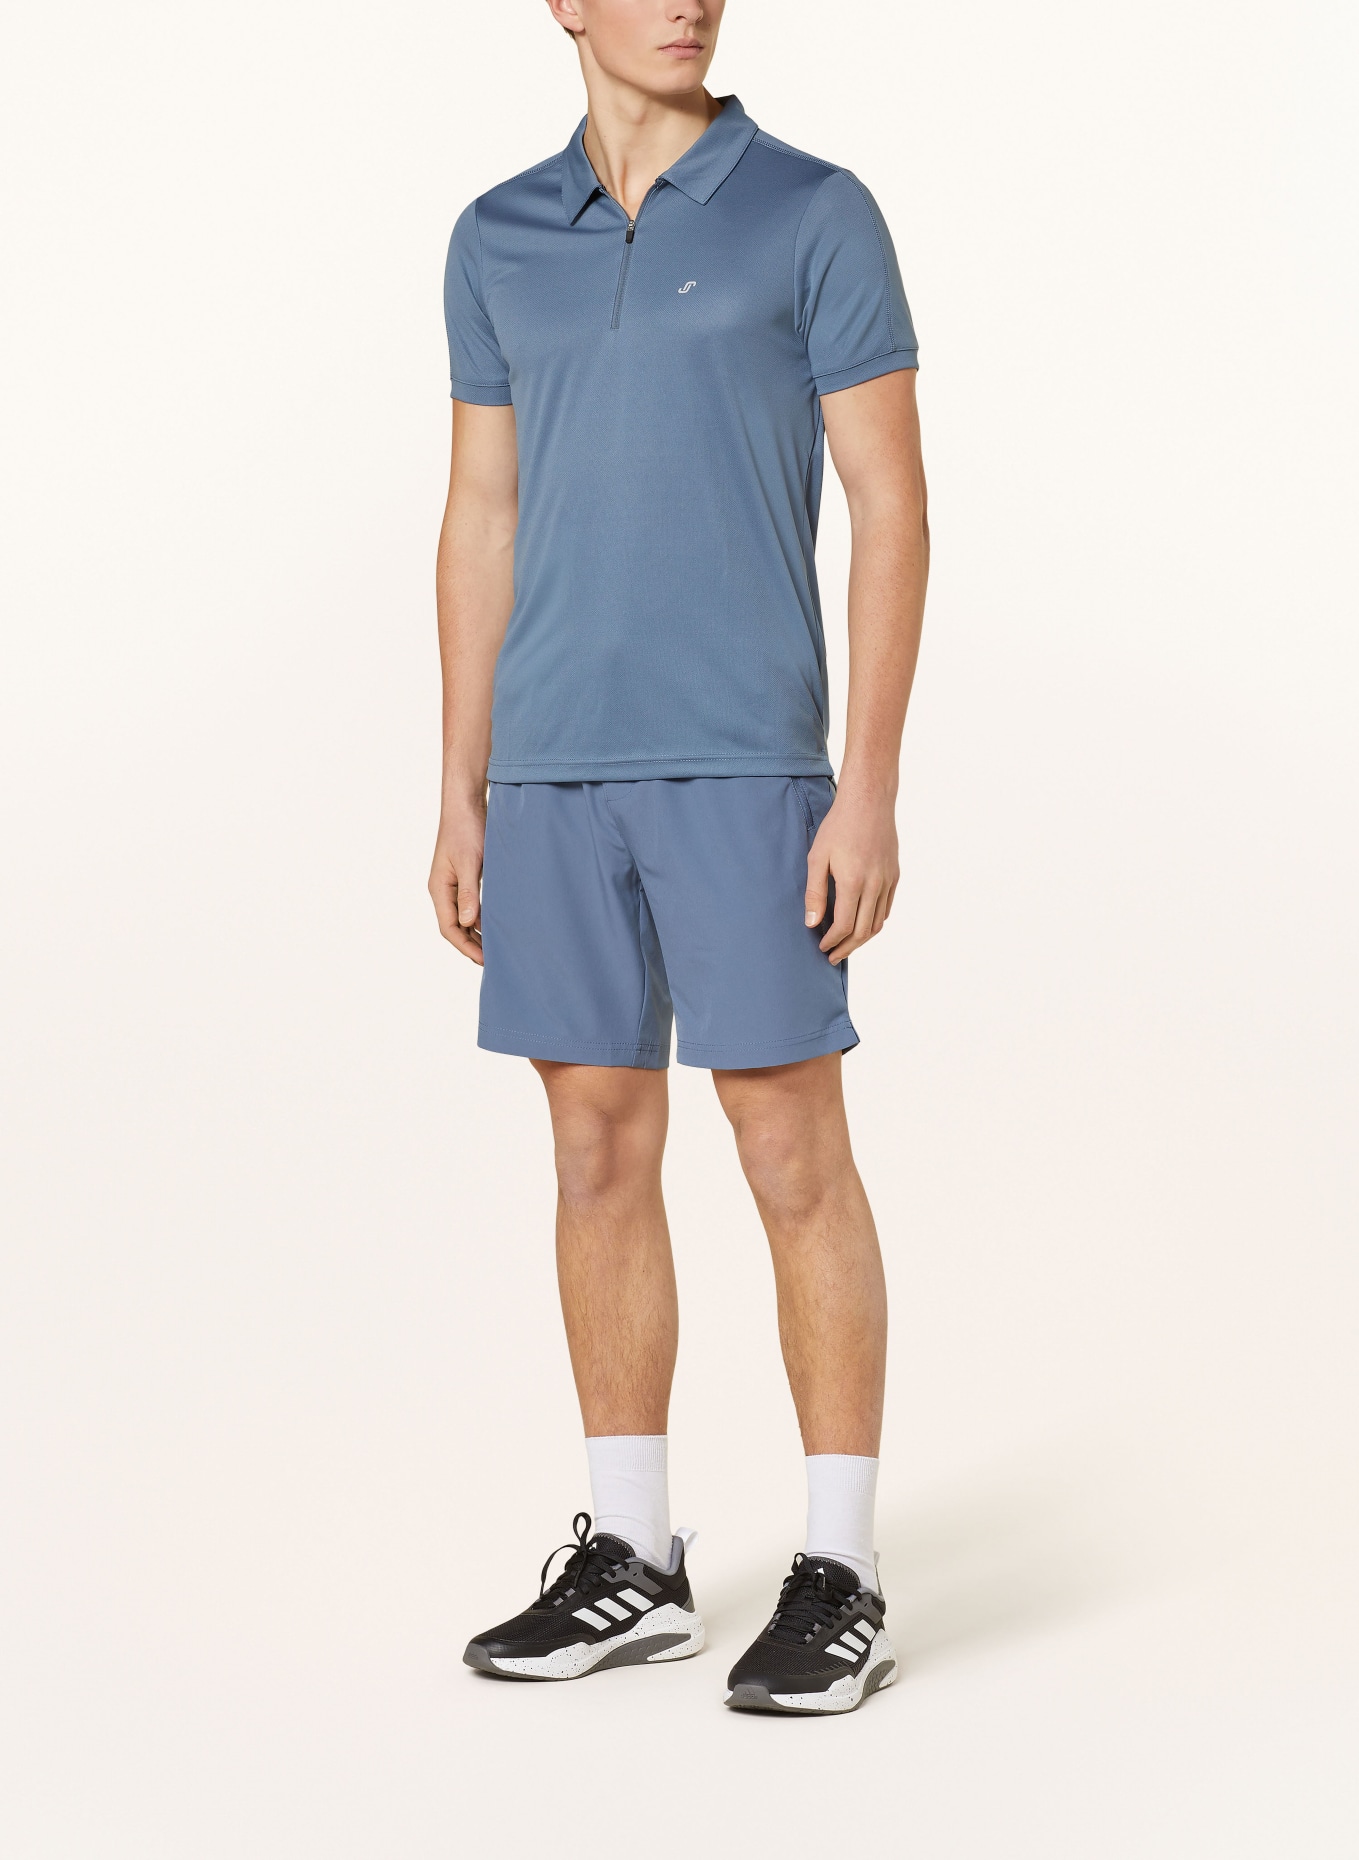 JOY sportswear Funktions-Poloshirt CLAAS, Farbe: BLAUGRAU (Bild 2)